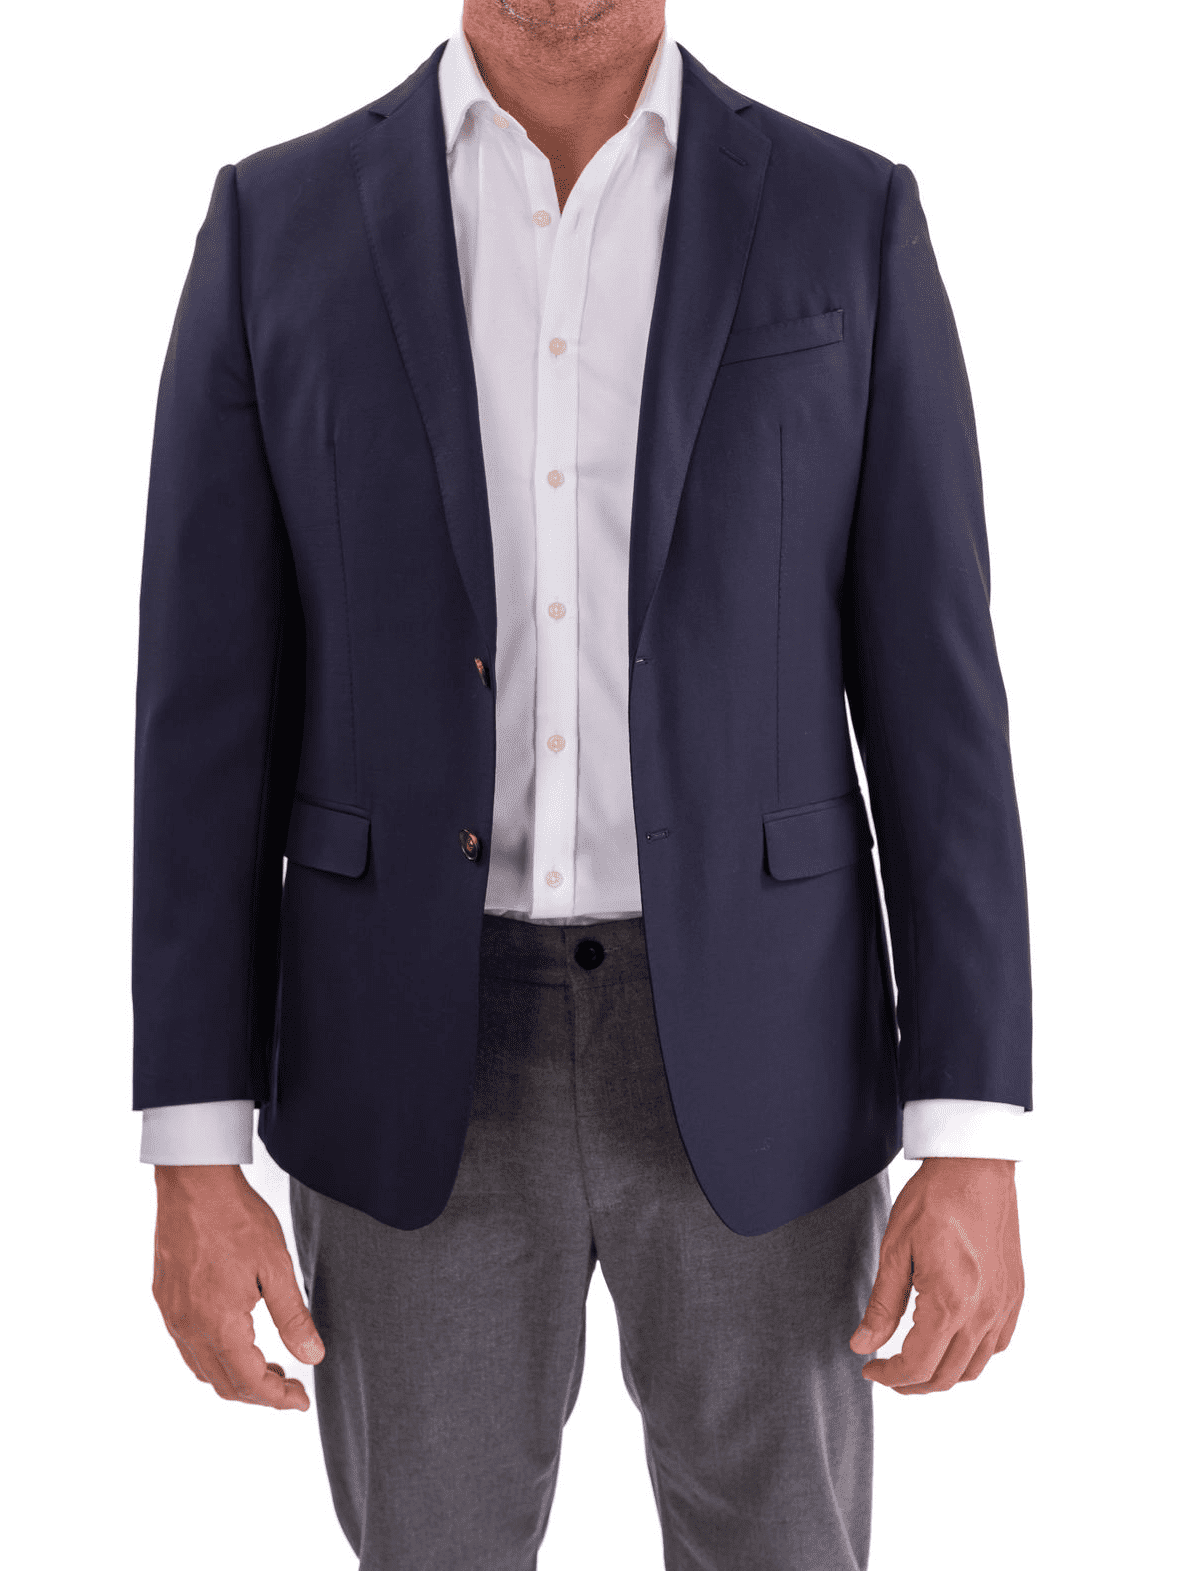 Blujacket BLAZERS 46R Blujacket Mens Navy Blue Textured Vitale Barberis Canonico Wool Trim Fit 2 Button Blazer Sportcoat